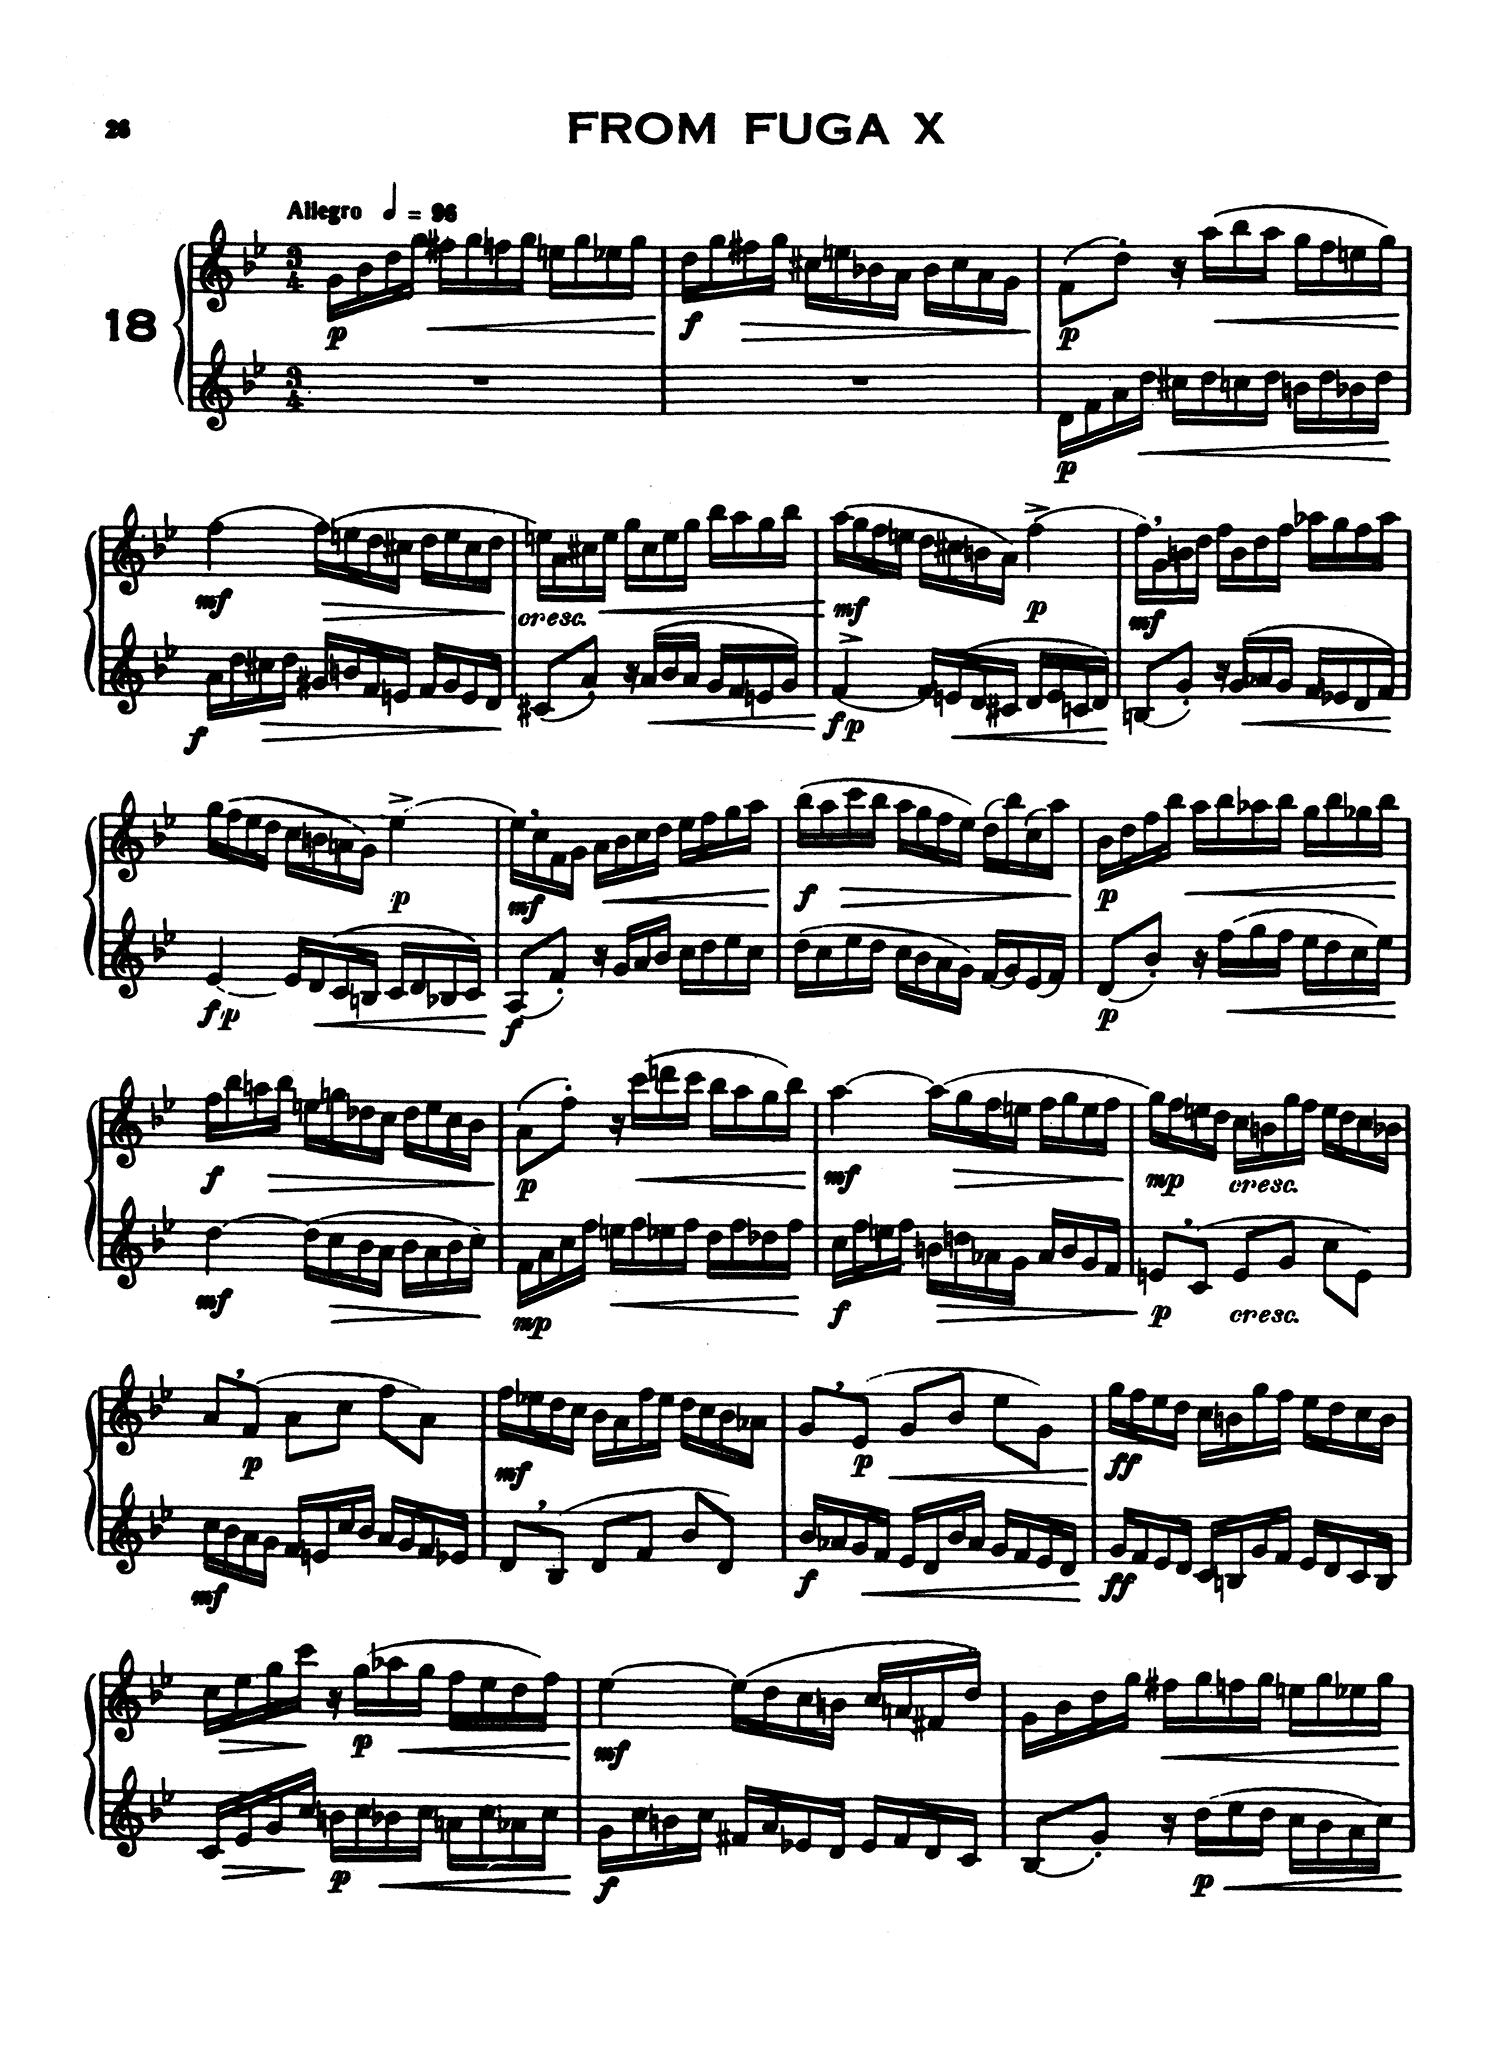 J. S. Bach Clarinet Duos, arranged by Langenus Fugue No. 10